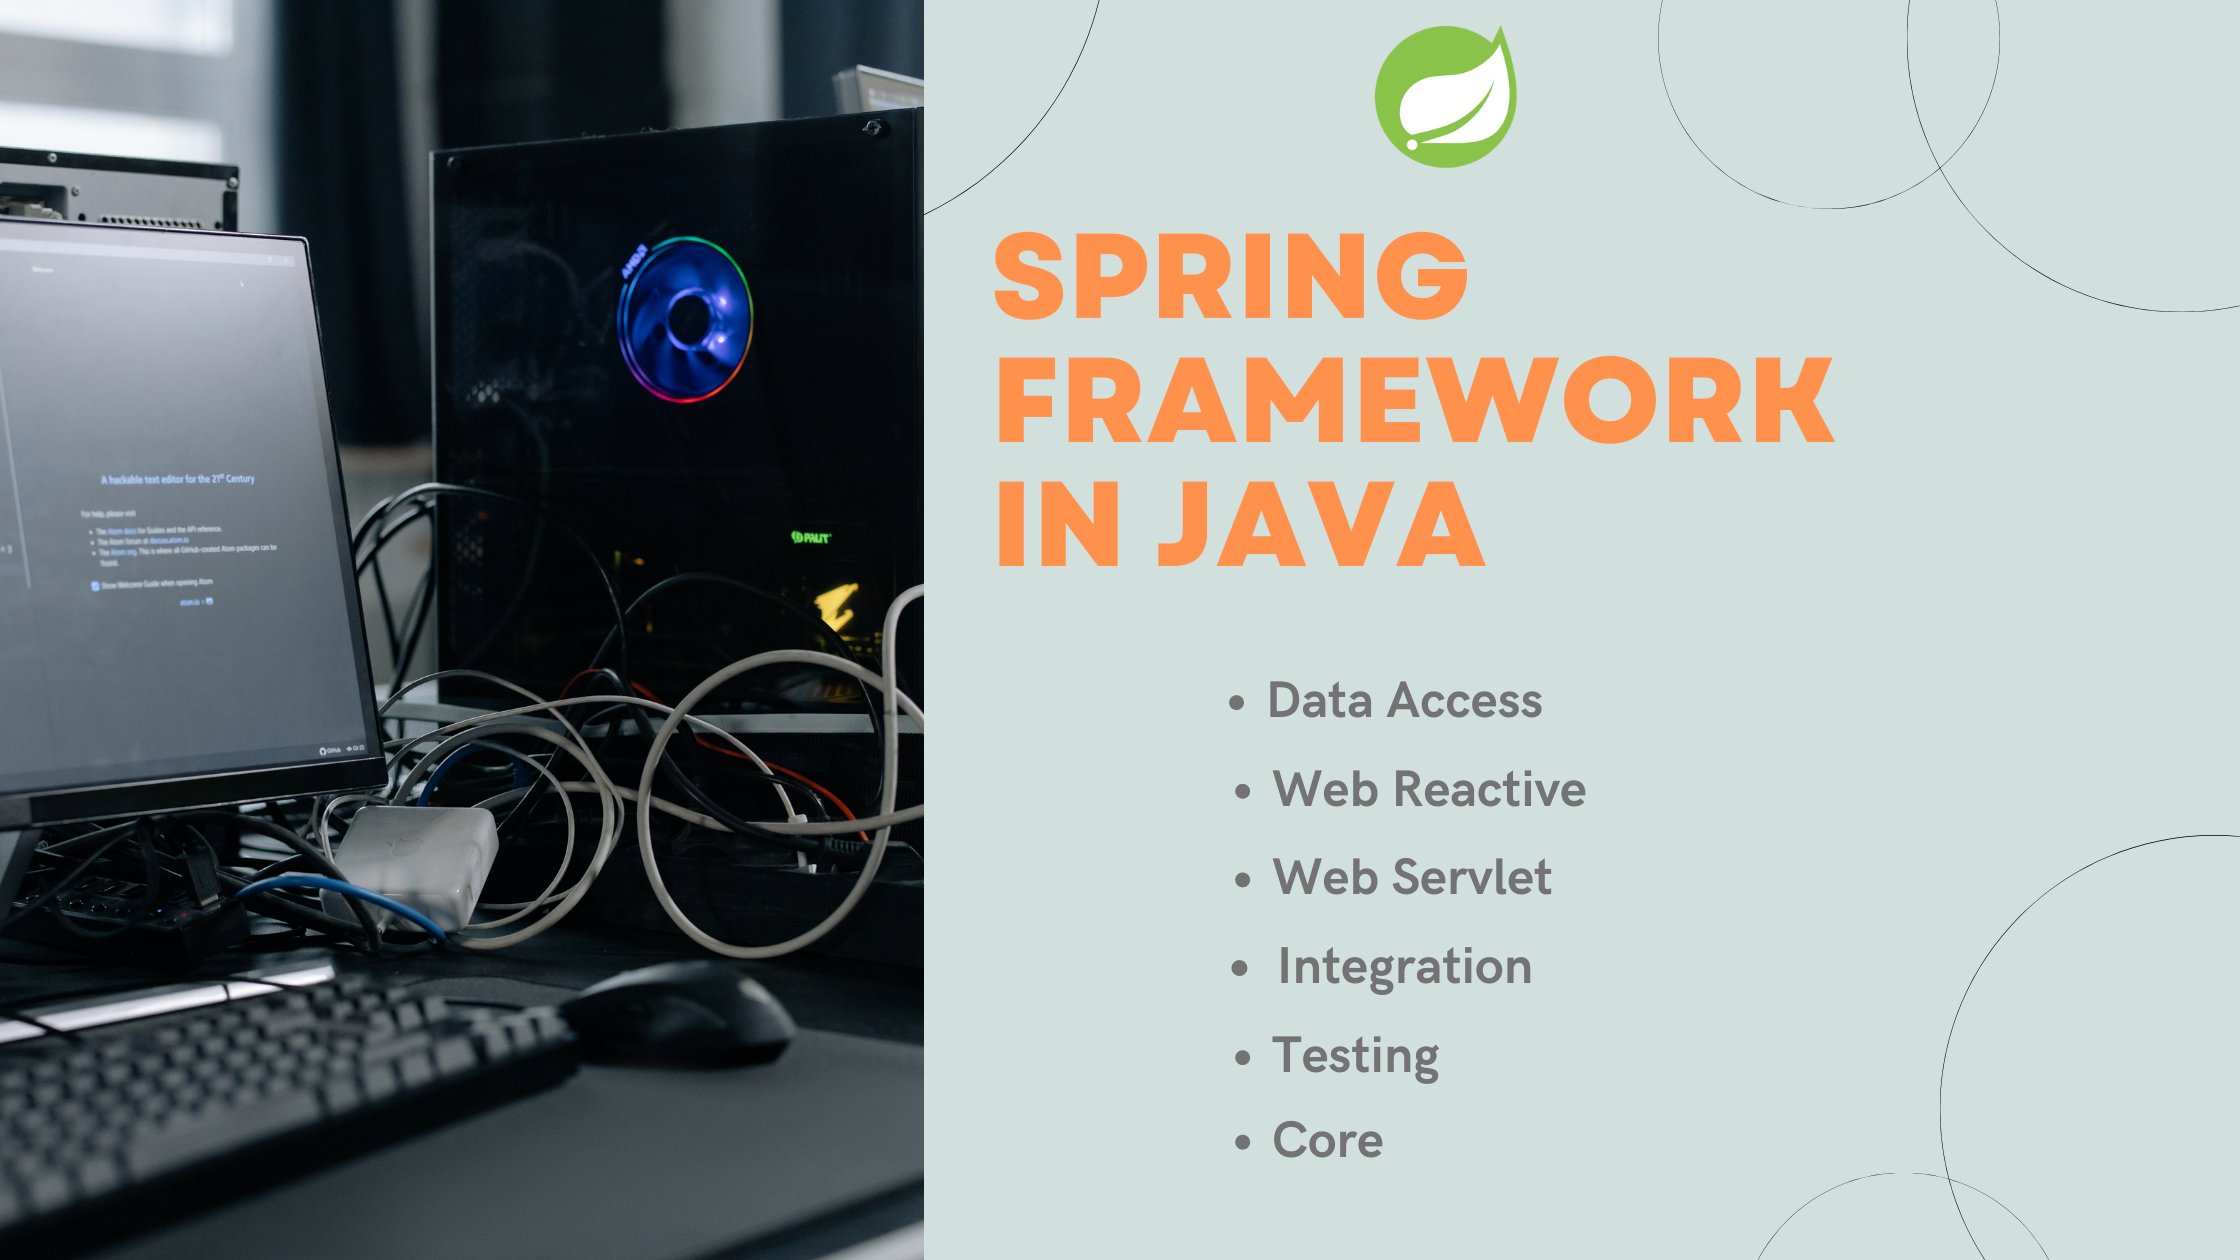 Why Should Java Developers Use the Spring Framework?